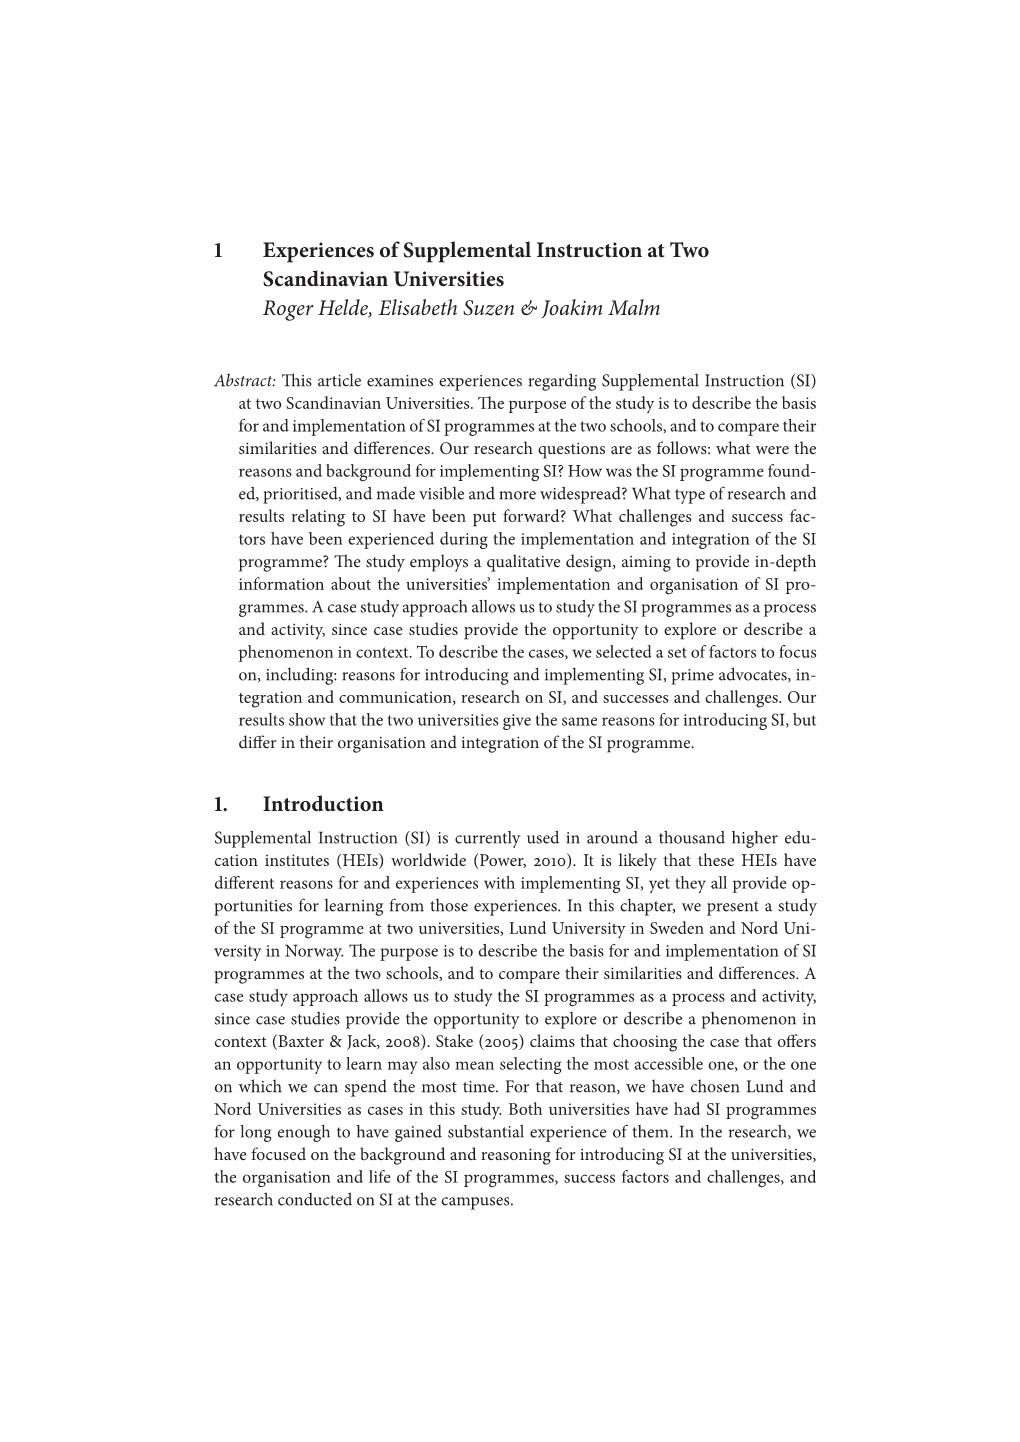 Supplemental Instruction Vol. 3